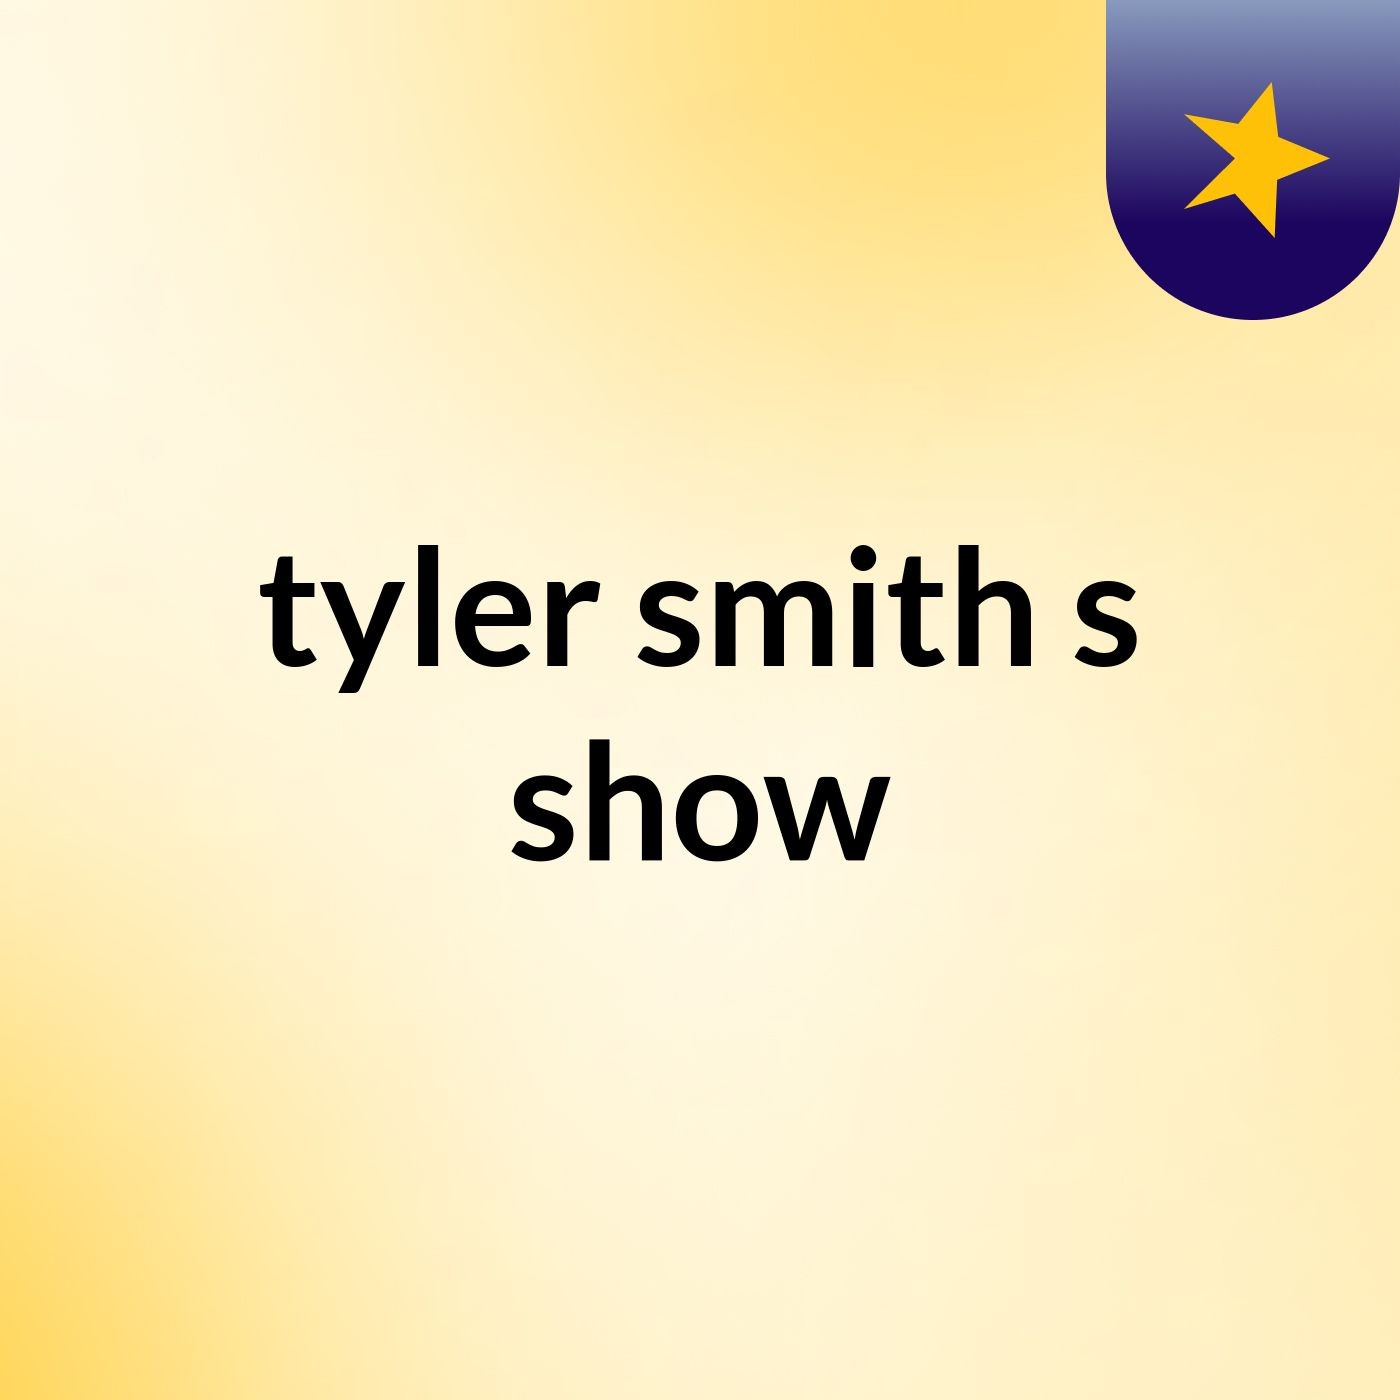 tyler smith's show